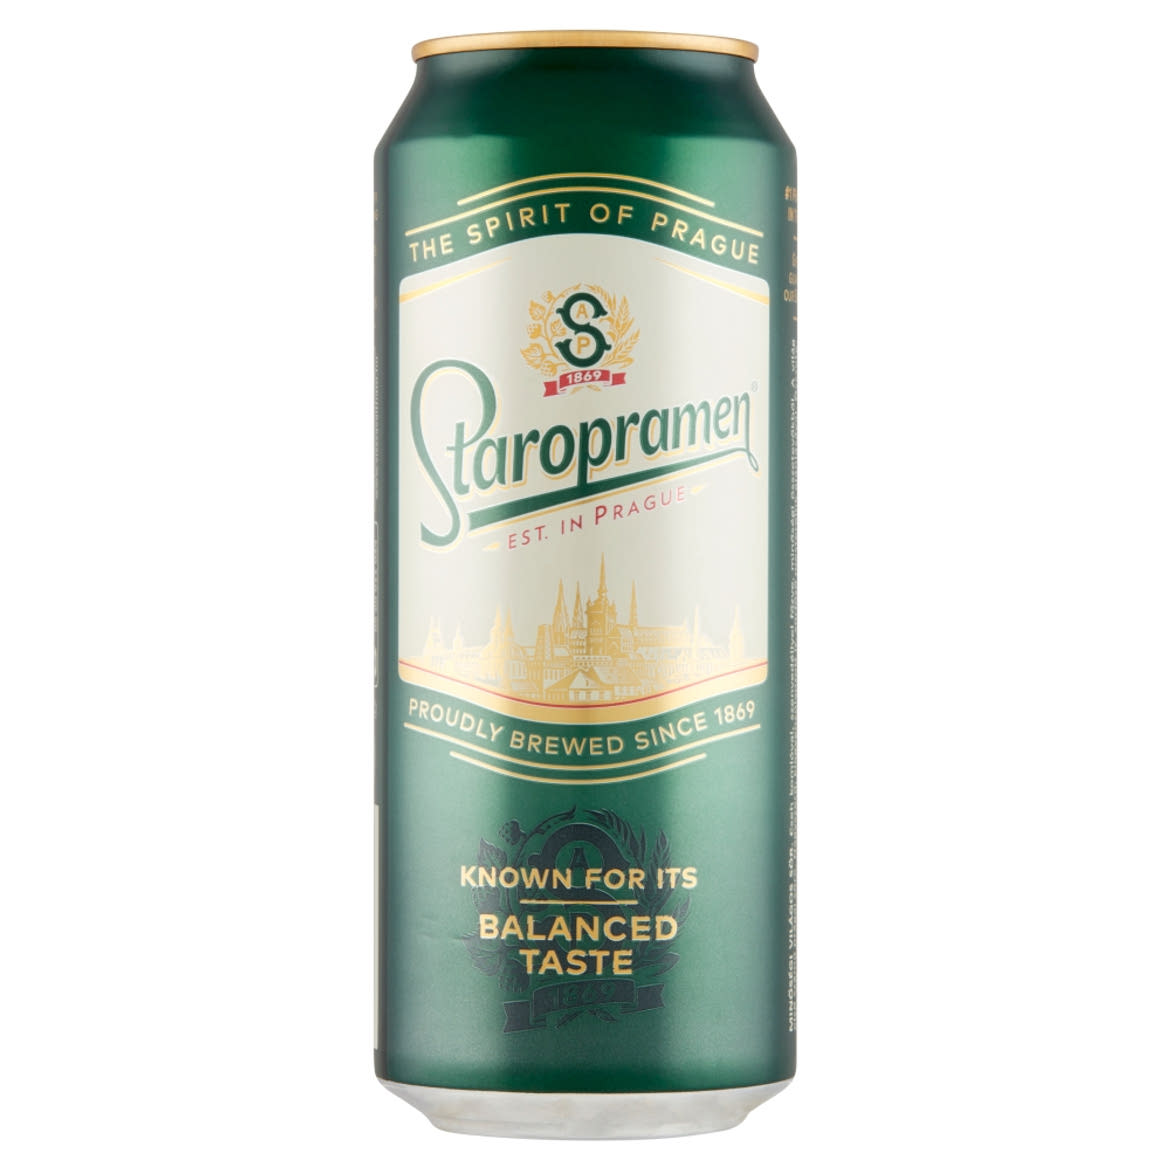 Staropramen minőségi világos sör 5%